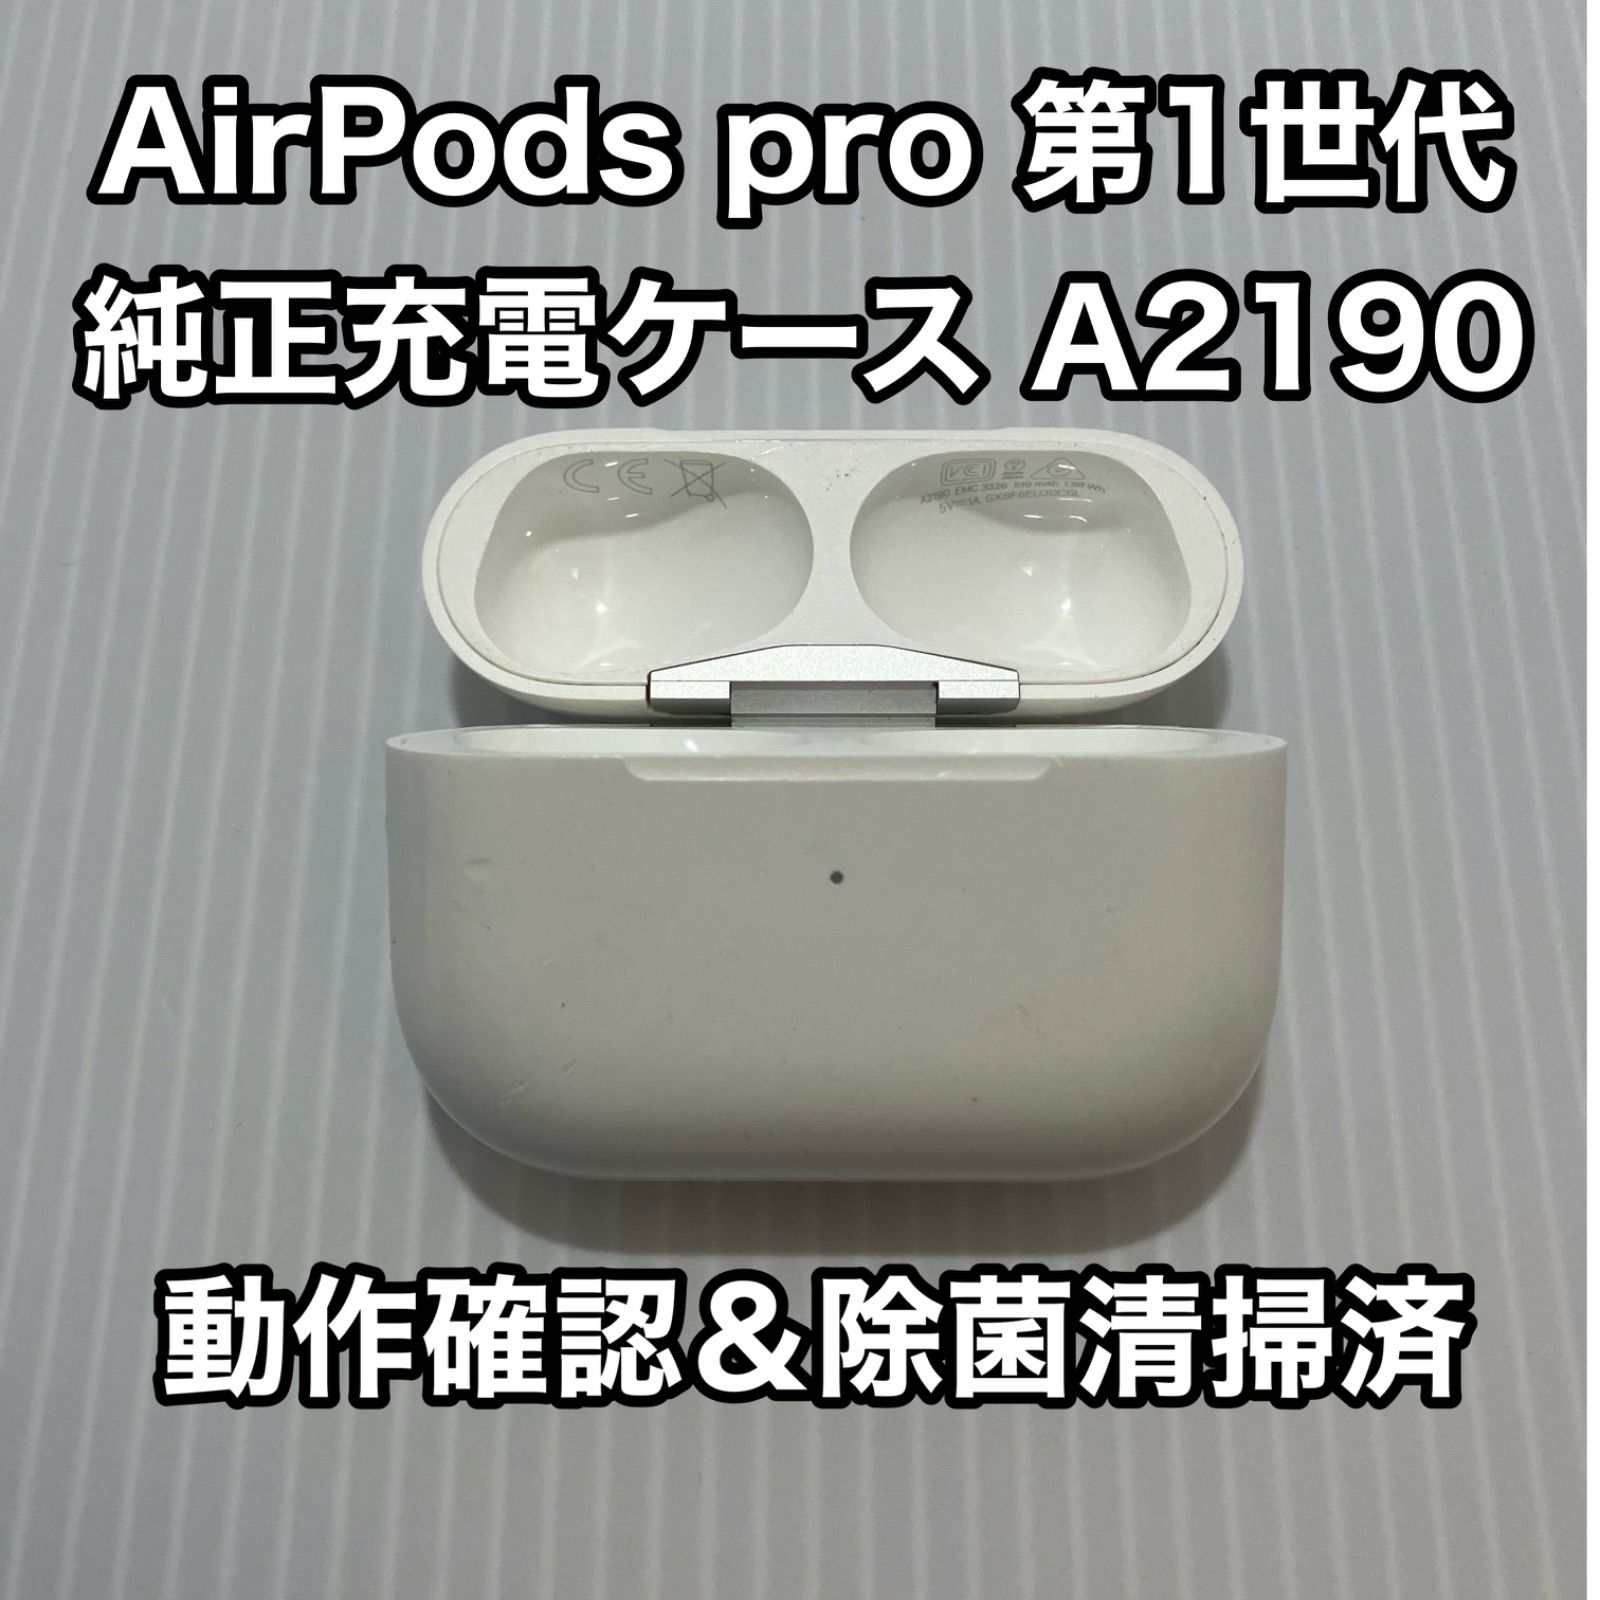 Apple純正 AirPods pro 充電ケース A2190 - メルカリ